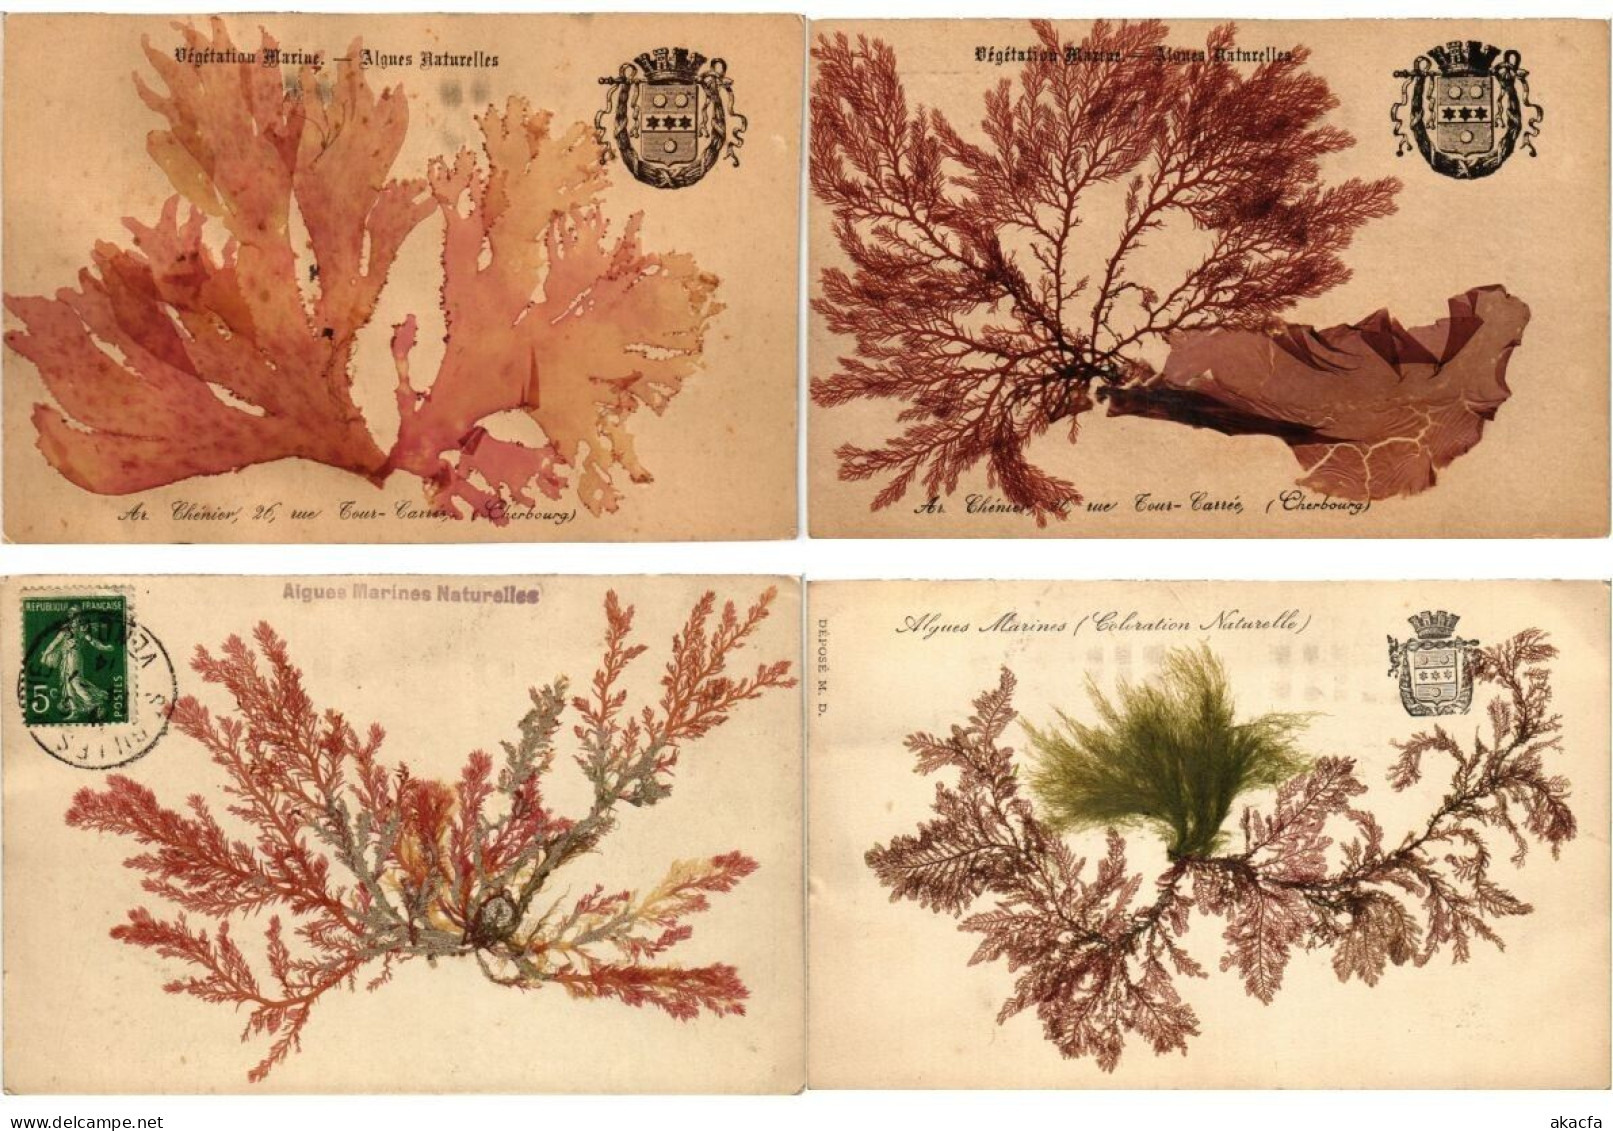 SEA PLANTS ALGUES NATURELLES, HANDMADE, FRANCE, 17 Vintage Postcards (L6230) - Colecciones Y Lotes